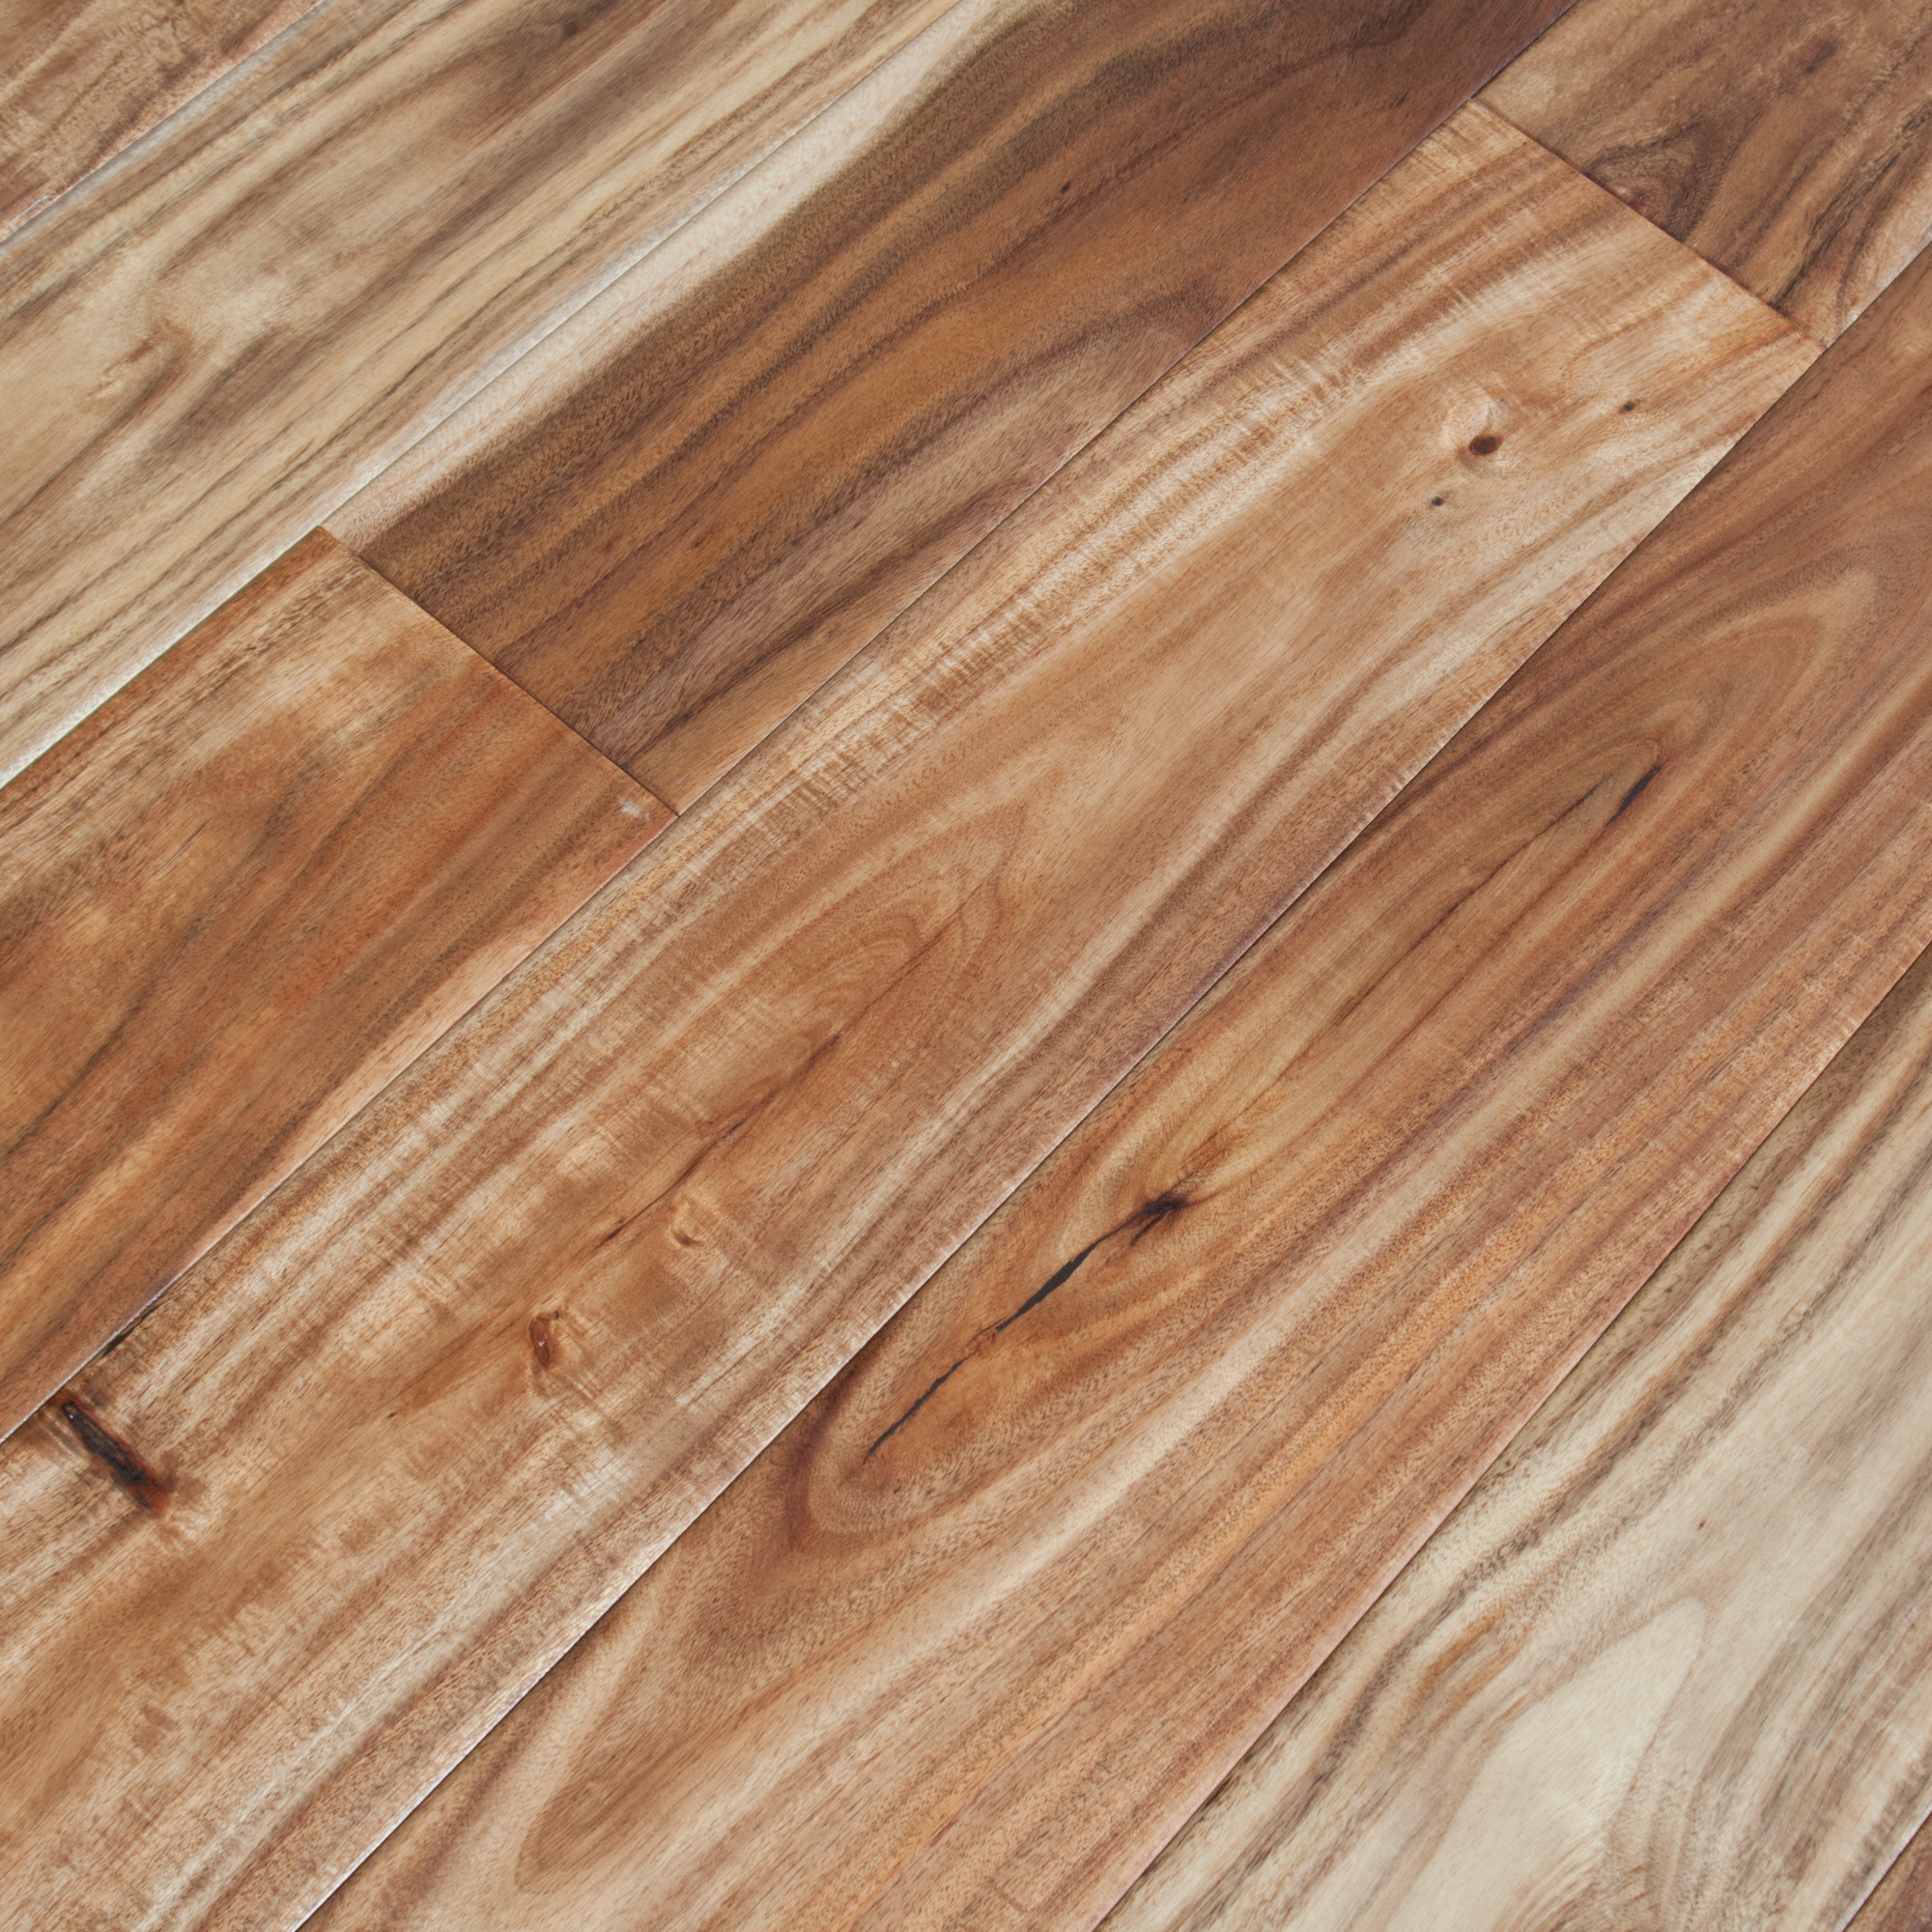 average price per square foot to install hardwood flooring of 9 mile creek acacia hand scraped acacia confusa wood floors in acacia handscraped natural hardwood flooring